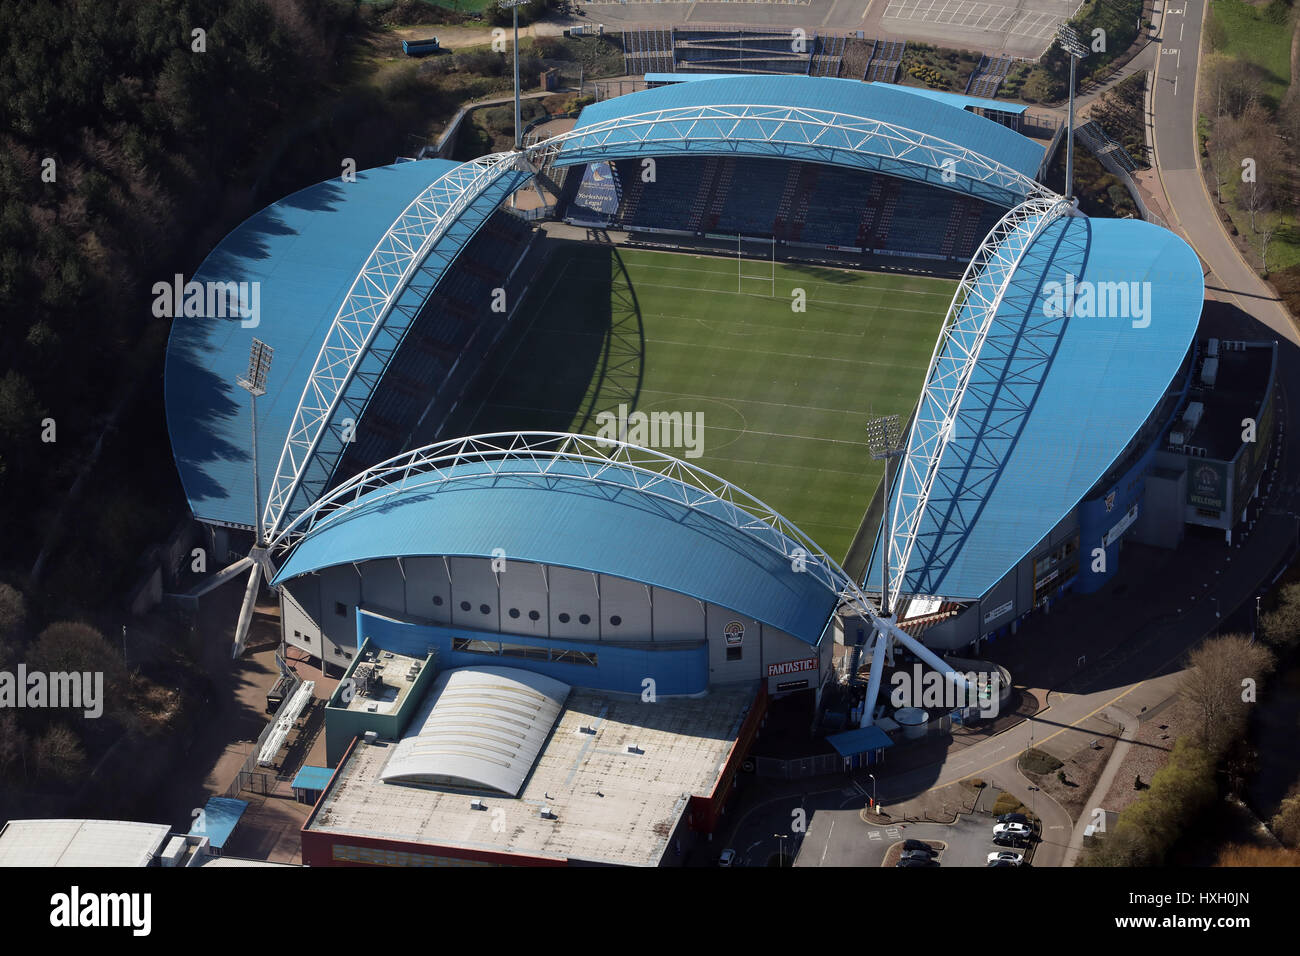 aerial view of The John Smith's Stadium, Huddersfield, Yorkshire, UK Stock Photo